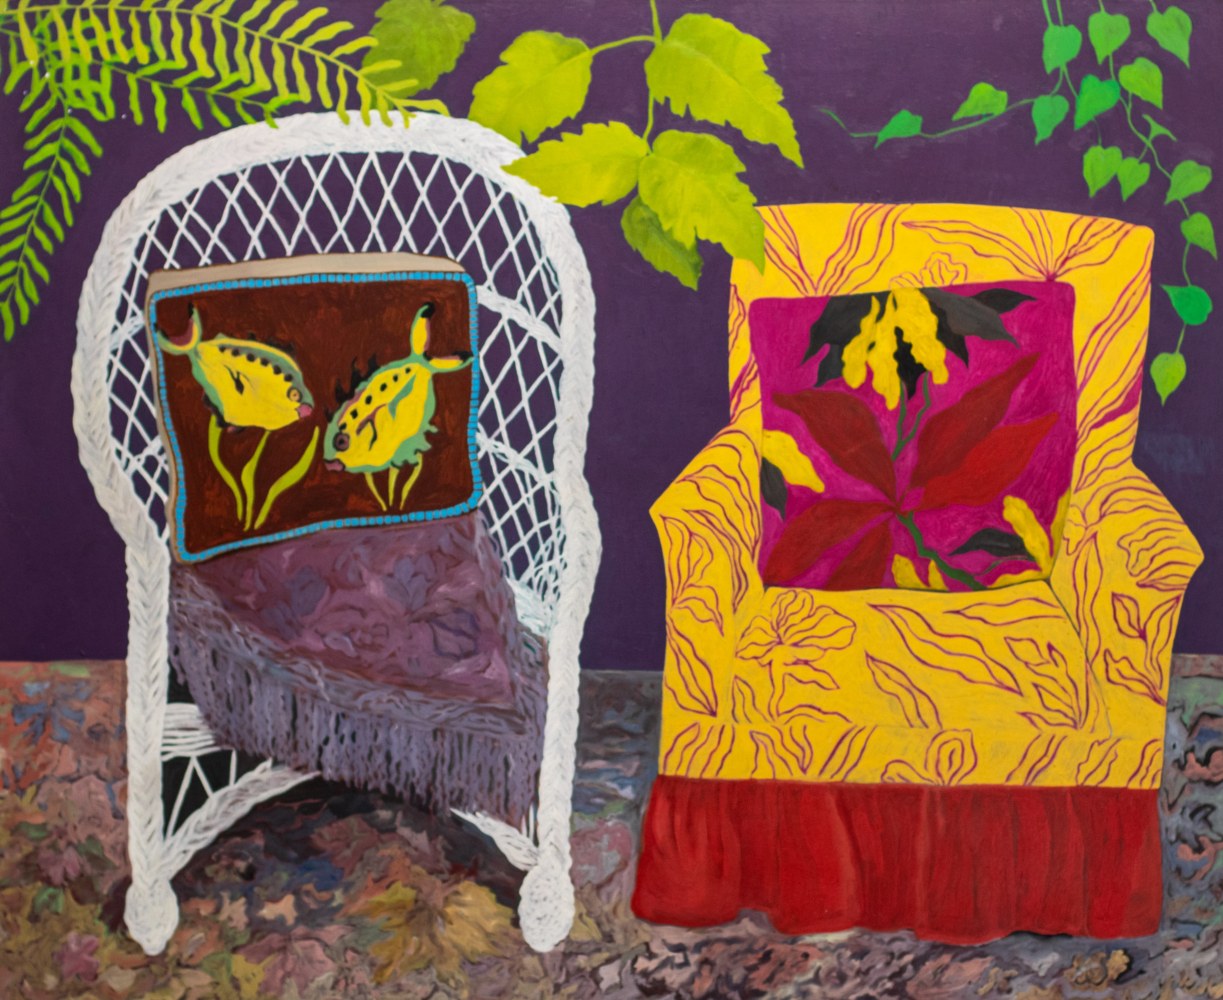 Hunt Slonem, chair duet, 1977, Oil painting on canvas, 70 x 58 inches, Hunt Slonem art for sale, pillow series